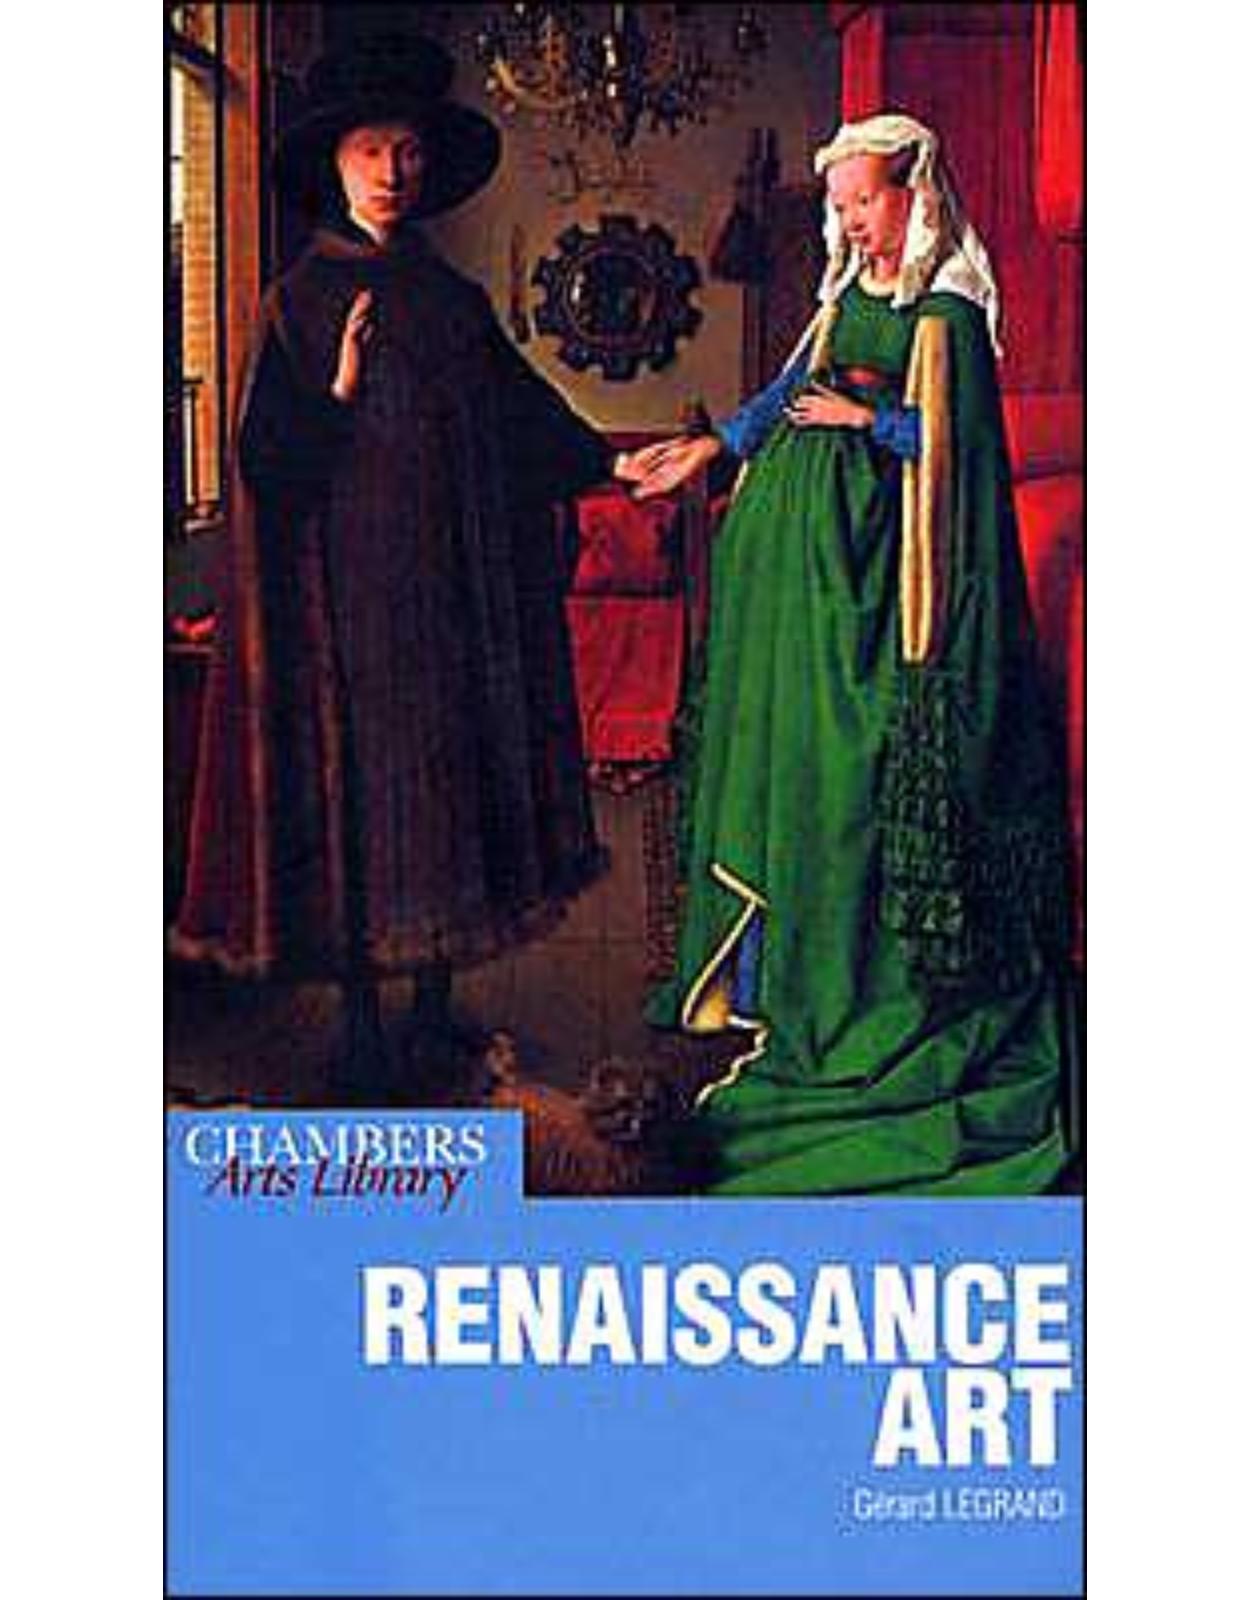 Renaissance Art (Chambers Arts Library)